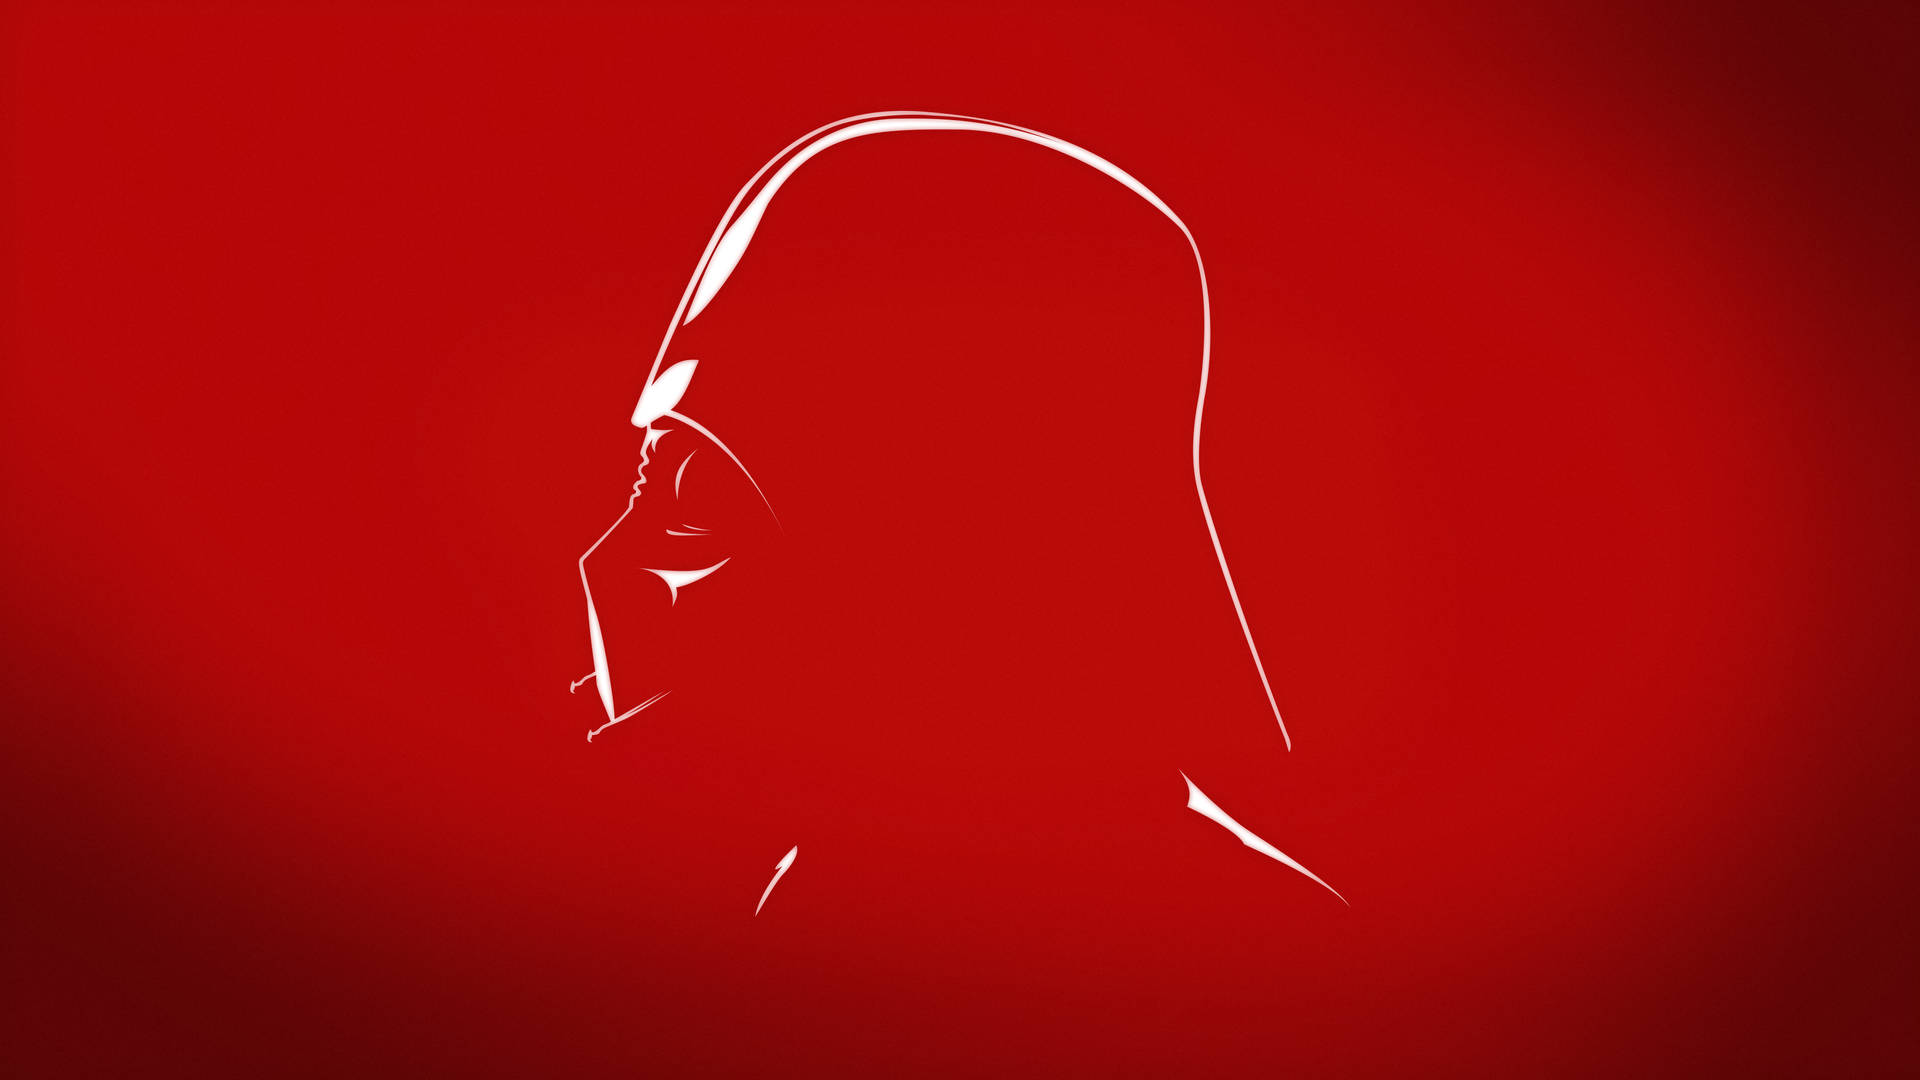 Darth Vader 4k Silhouette